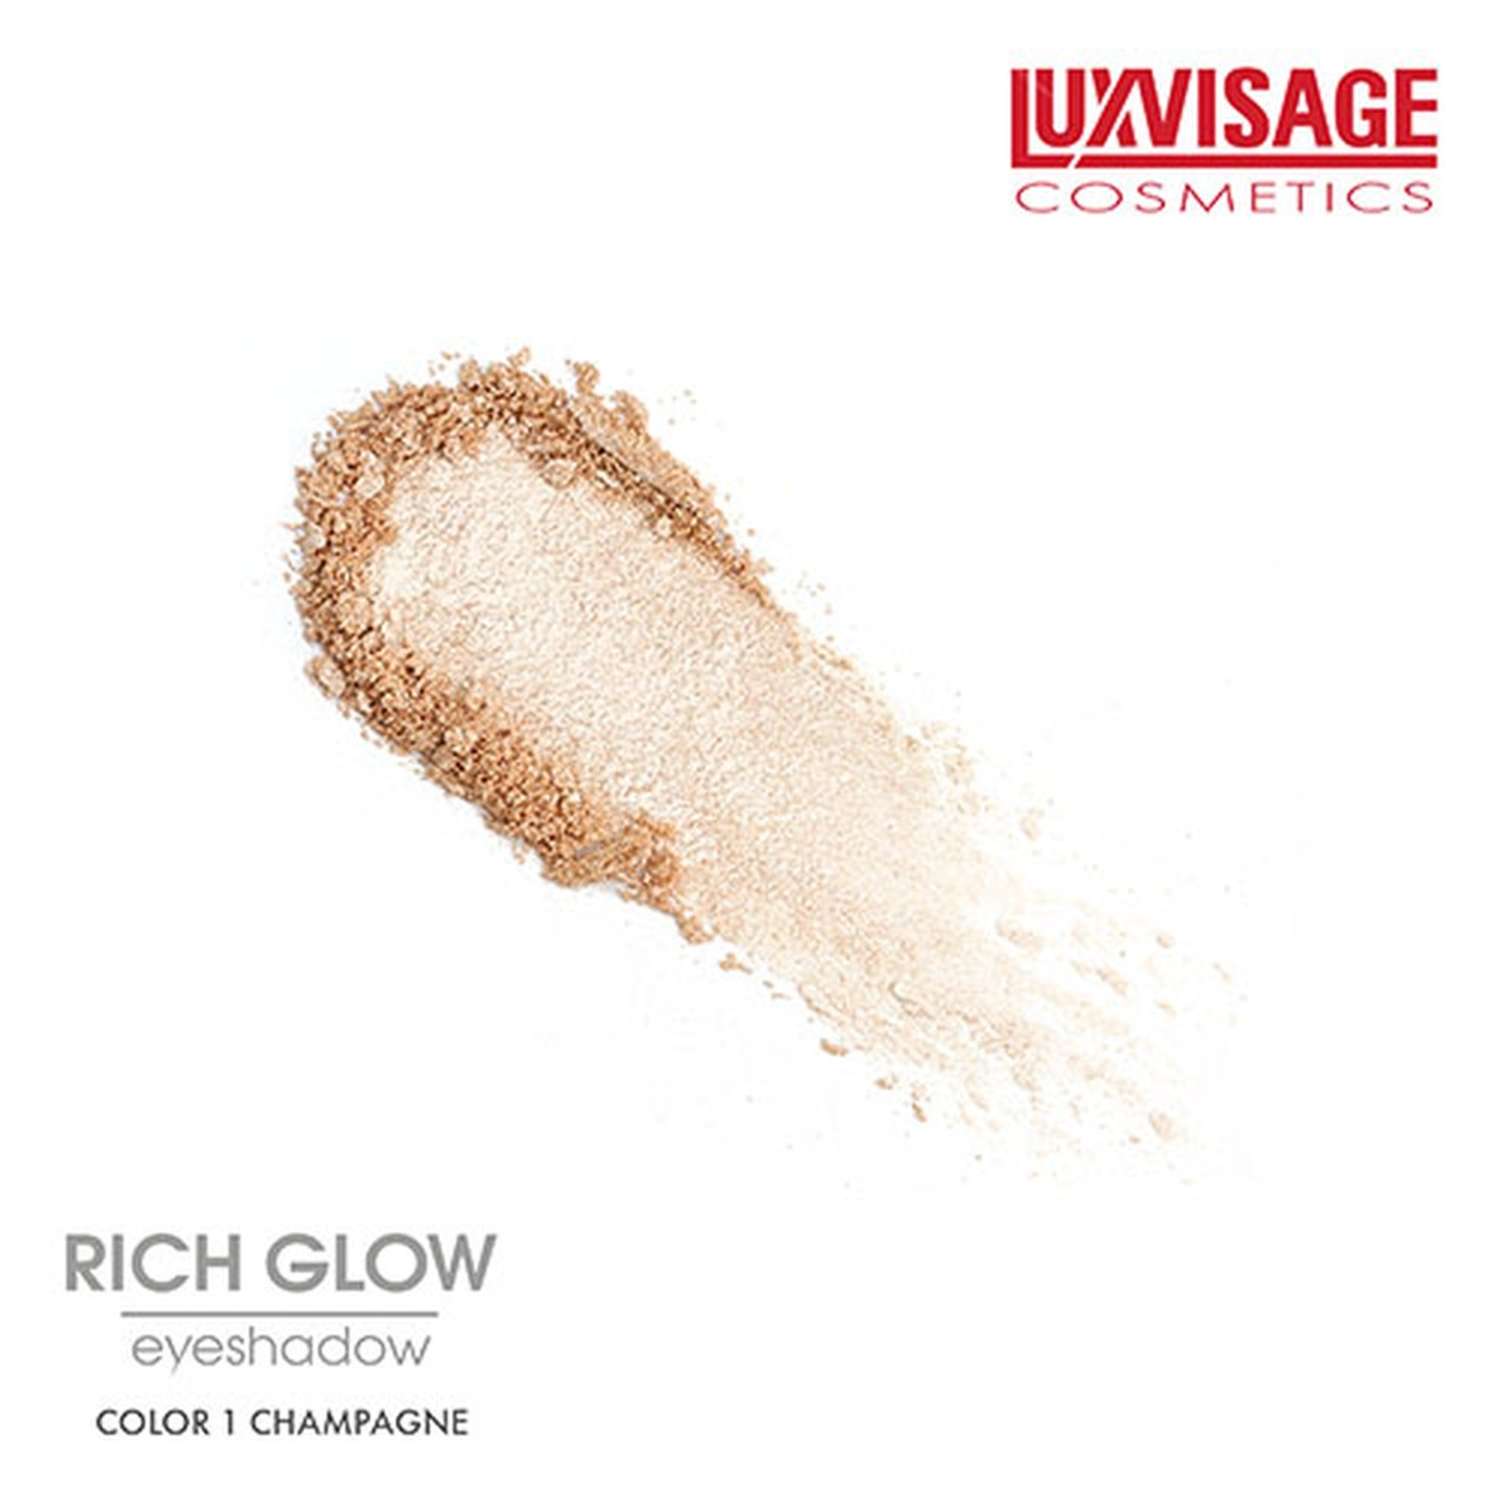 Тени для век Luxvisage Rich glow тон 1 champagne - фото 4